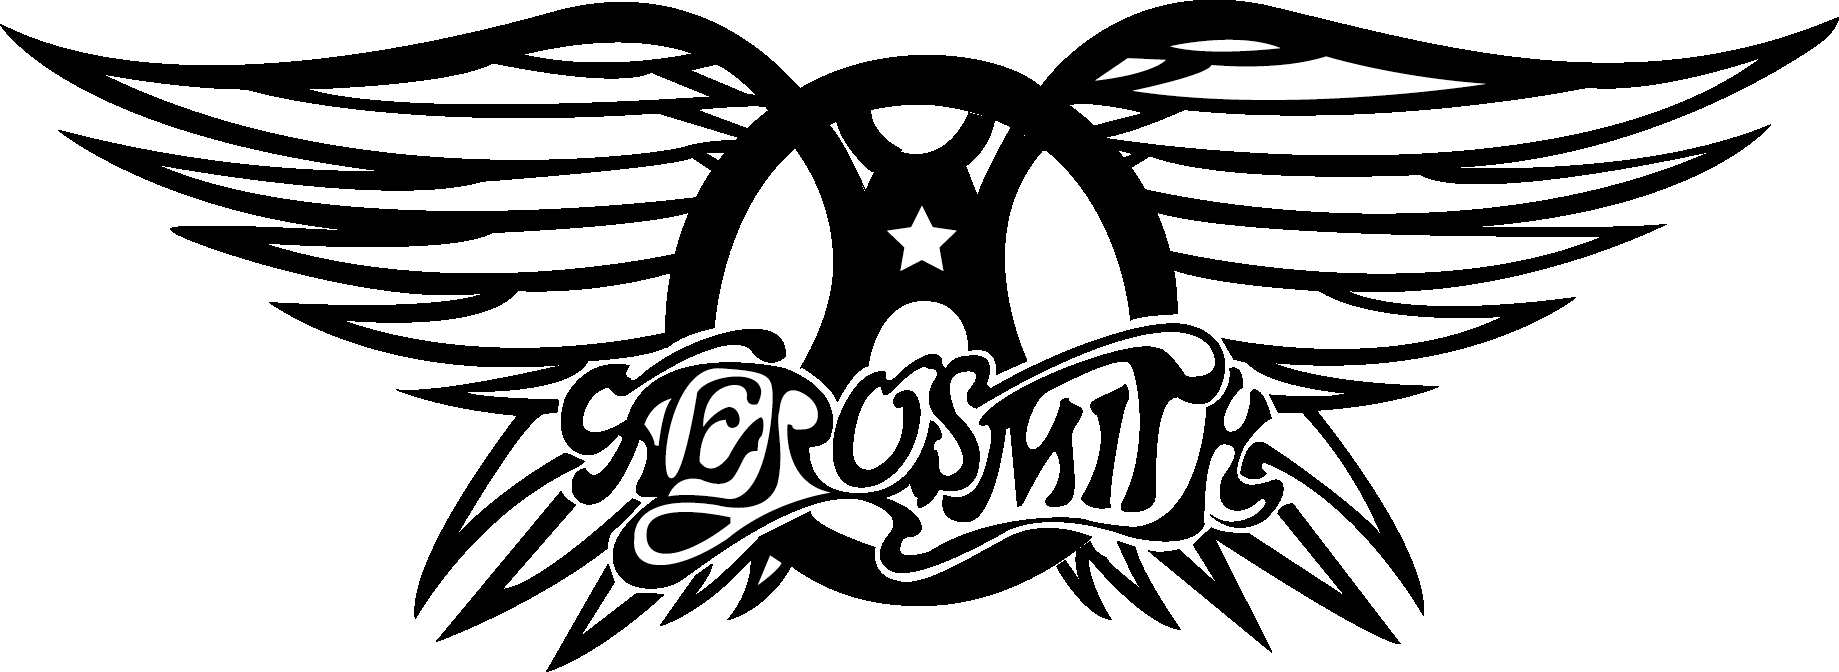 Aerosmith Logo - Aerosmith Logo Vector Free Download